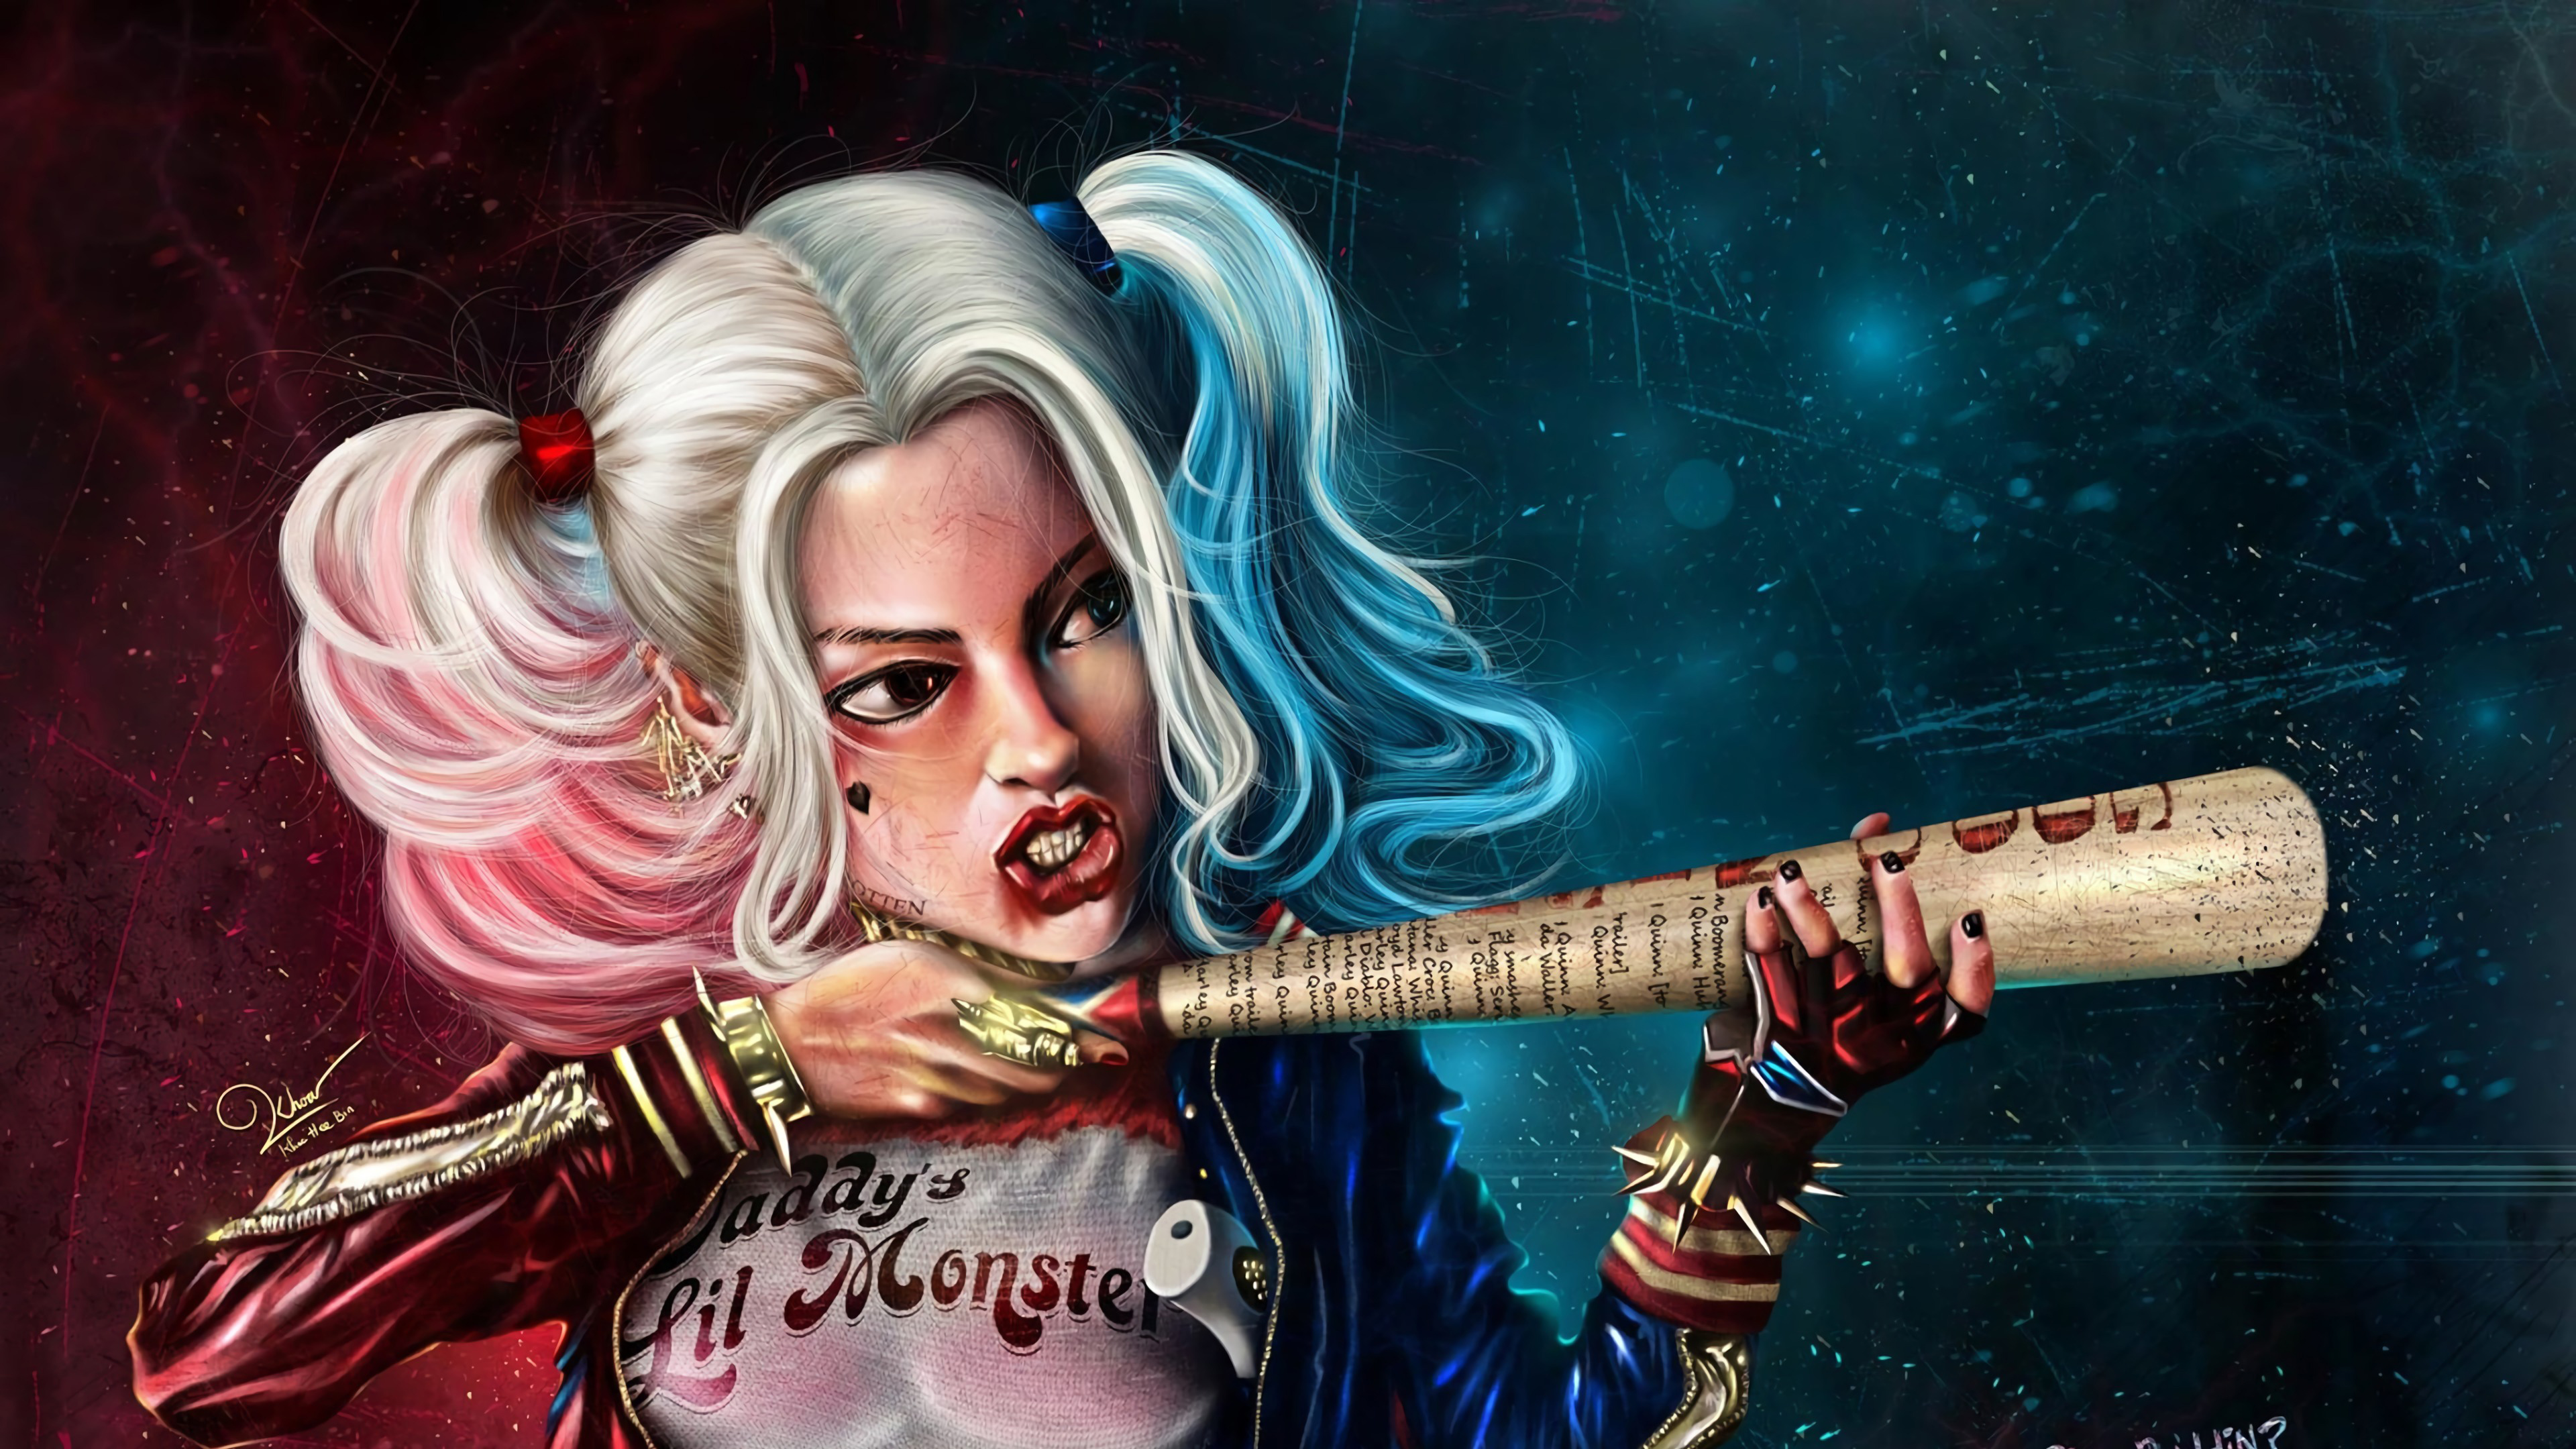 Harley Quinn 4k Ultra HD Wallpaper | Background Image ...